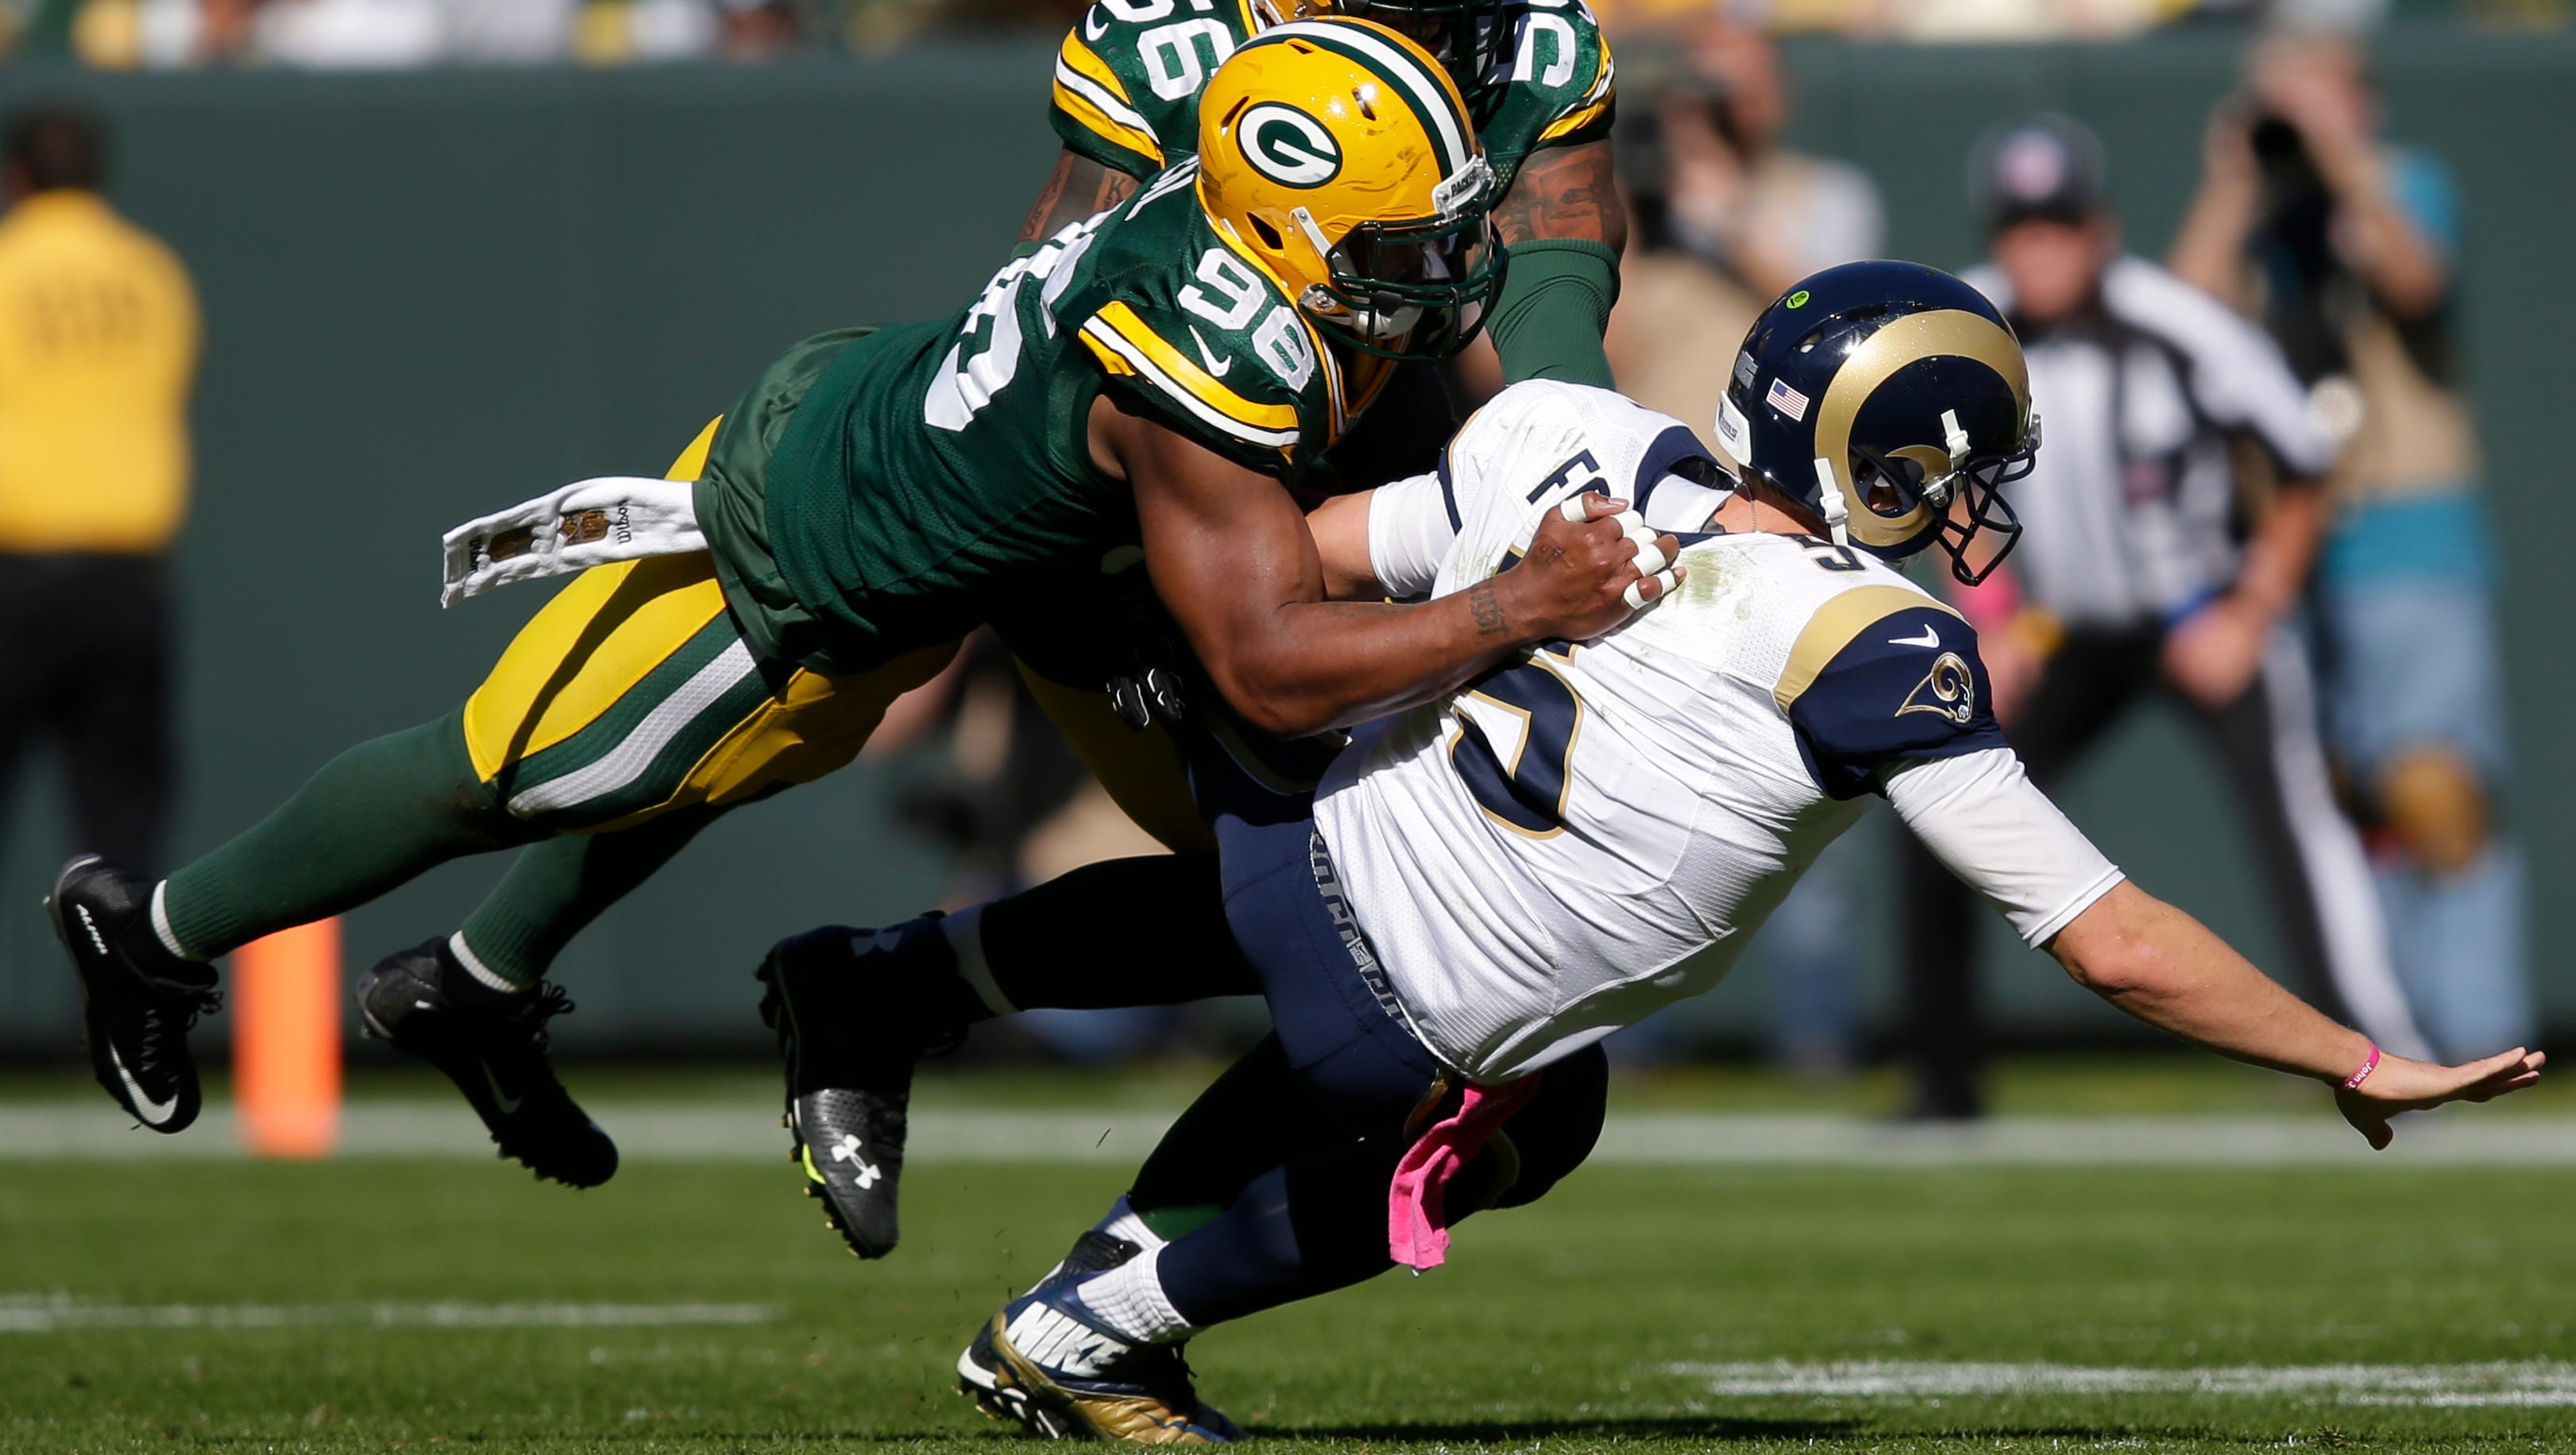 Green Bay Packers linebacker Mike Neal pressures St. Louis Rams quarterback Nick Foles.